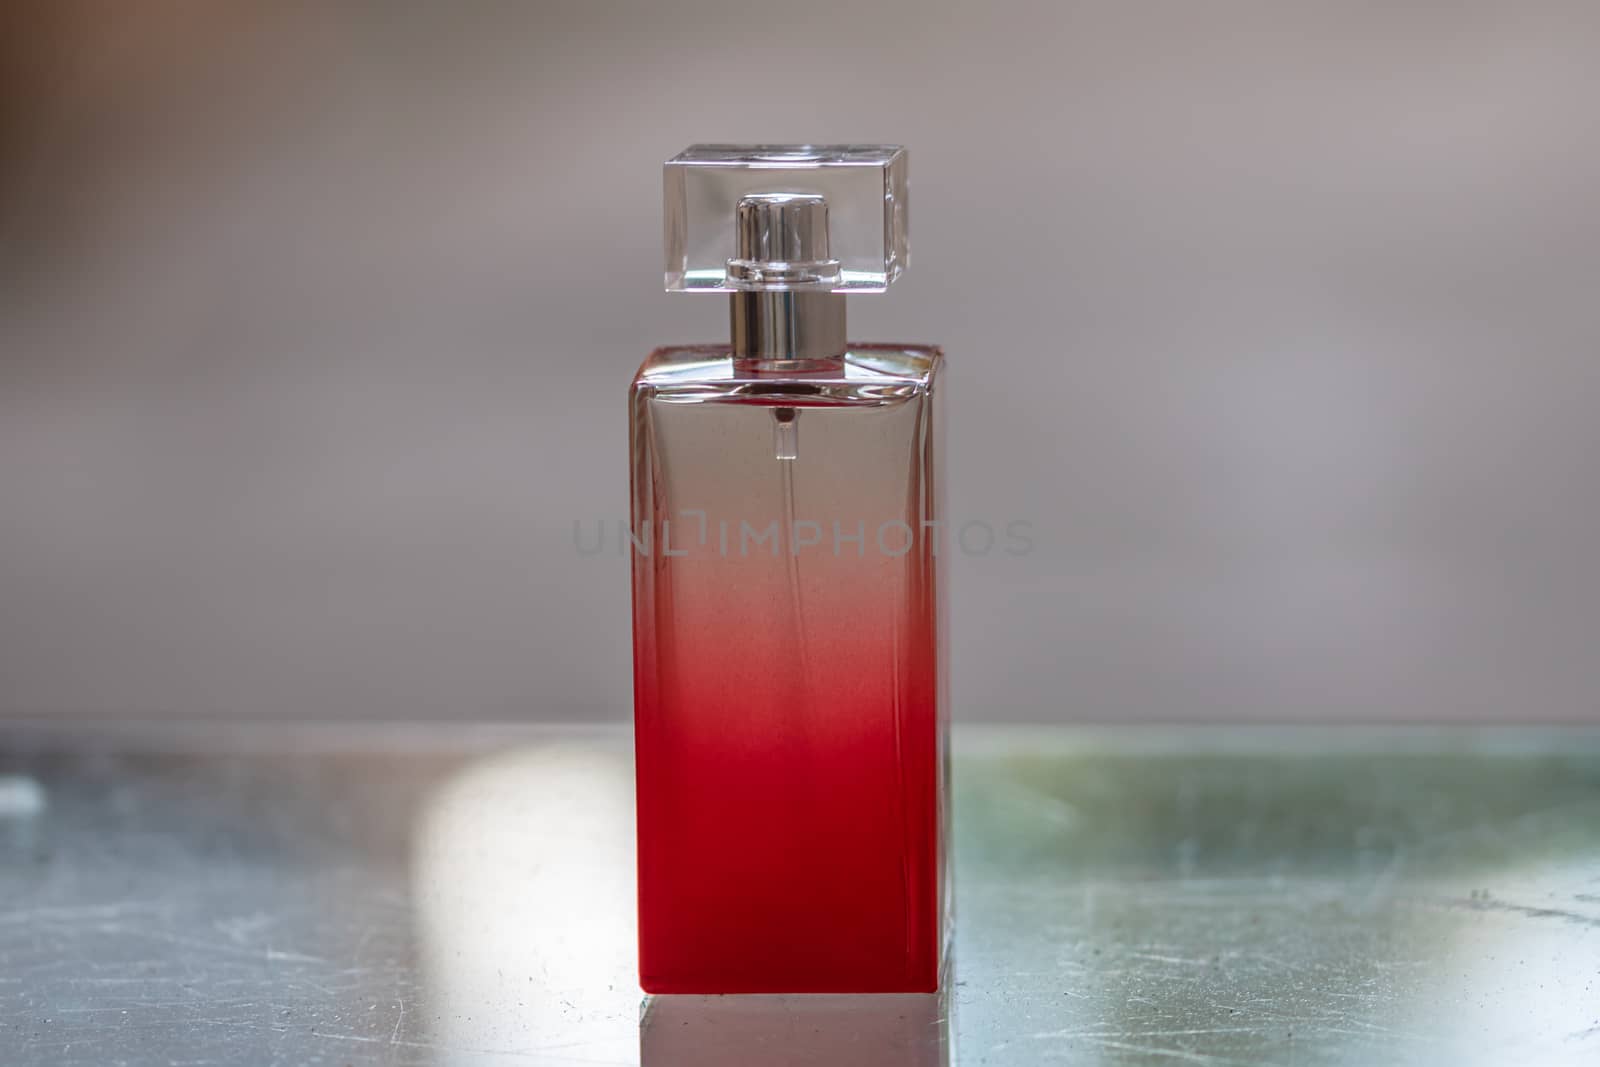 Elegant perfume bottle isolated on blurred background with copy  by vladispas